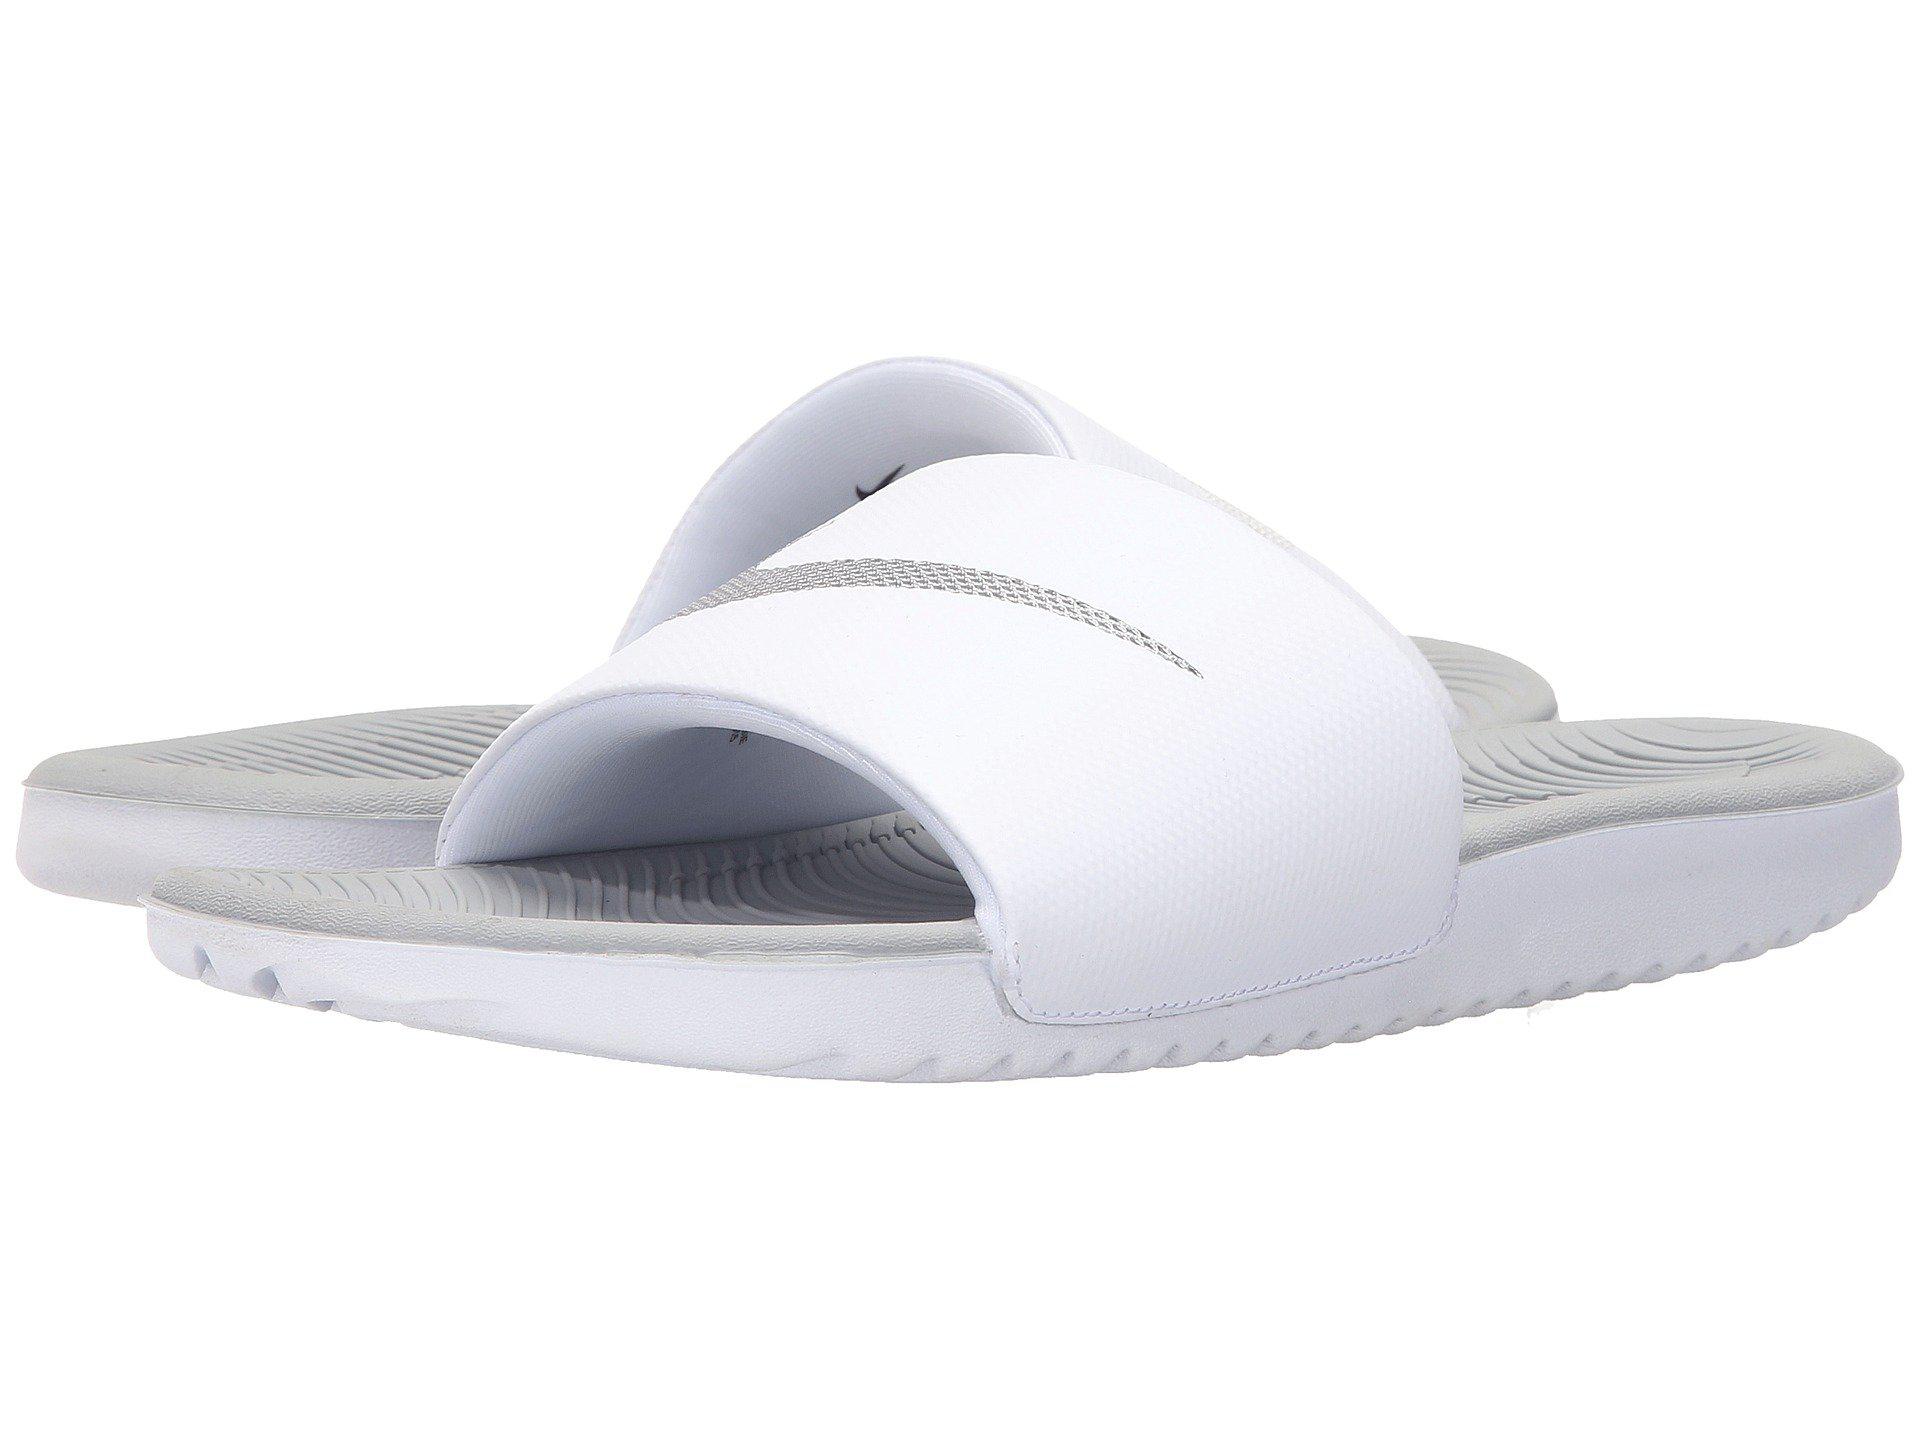 Nike Kawa Slide (white/metallic Silver) Women's Sandals | Lyst